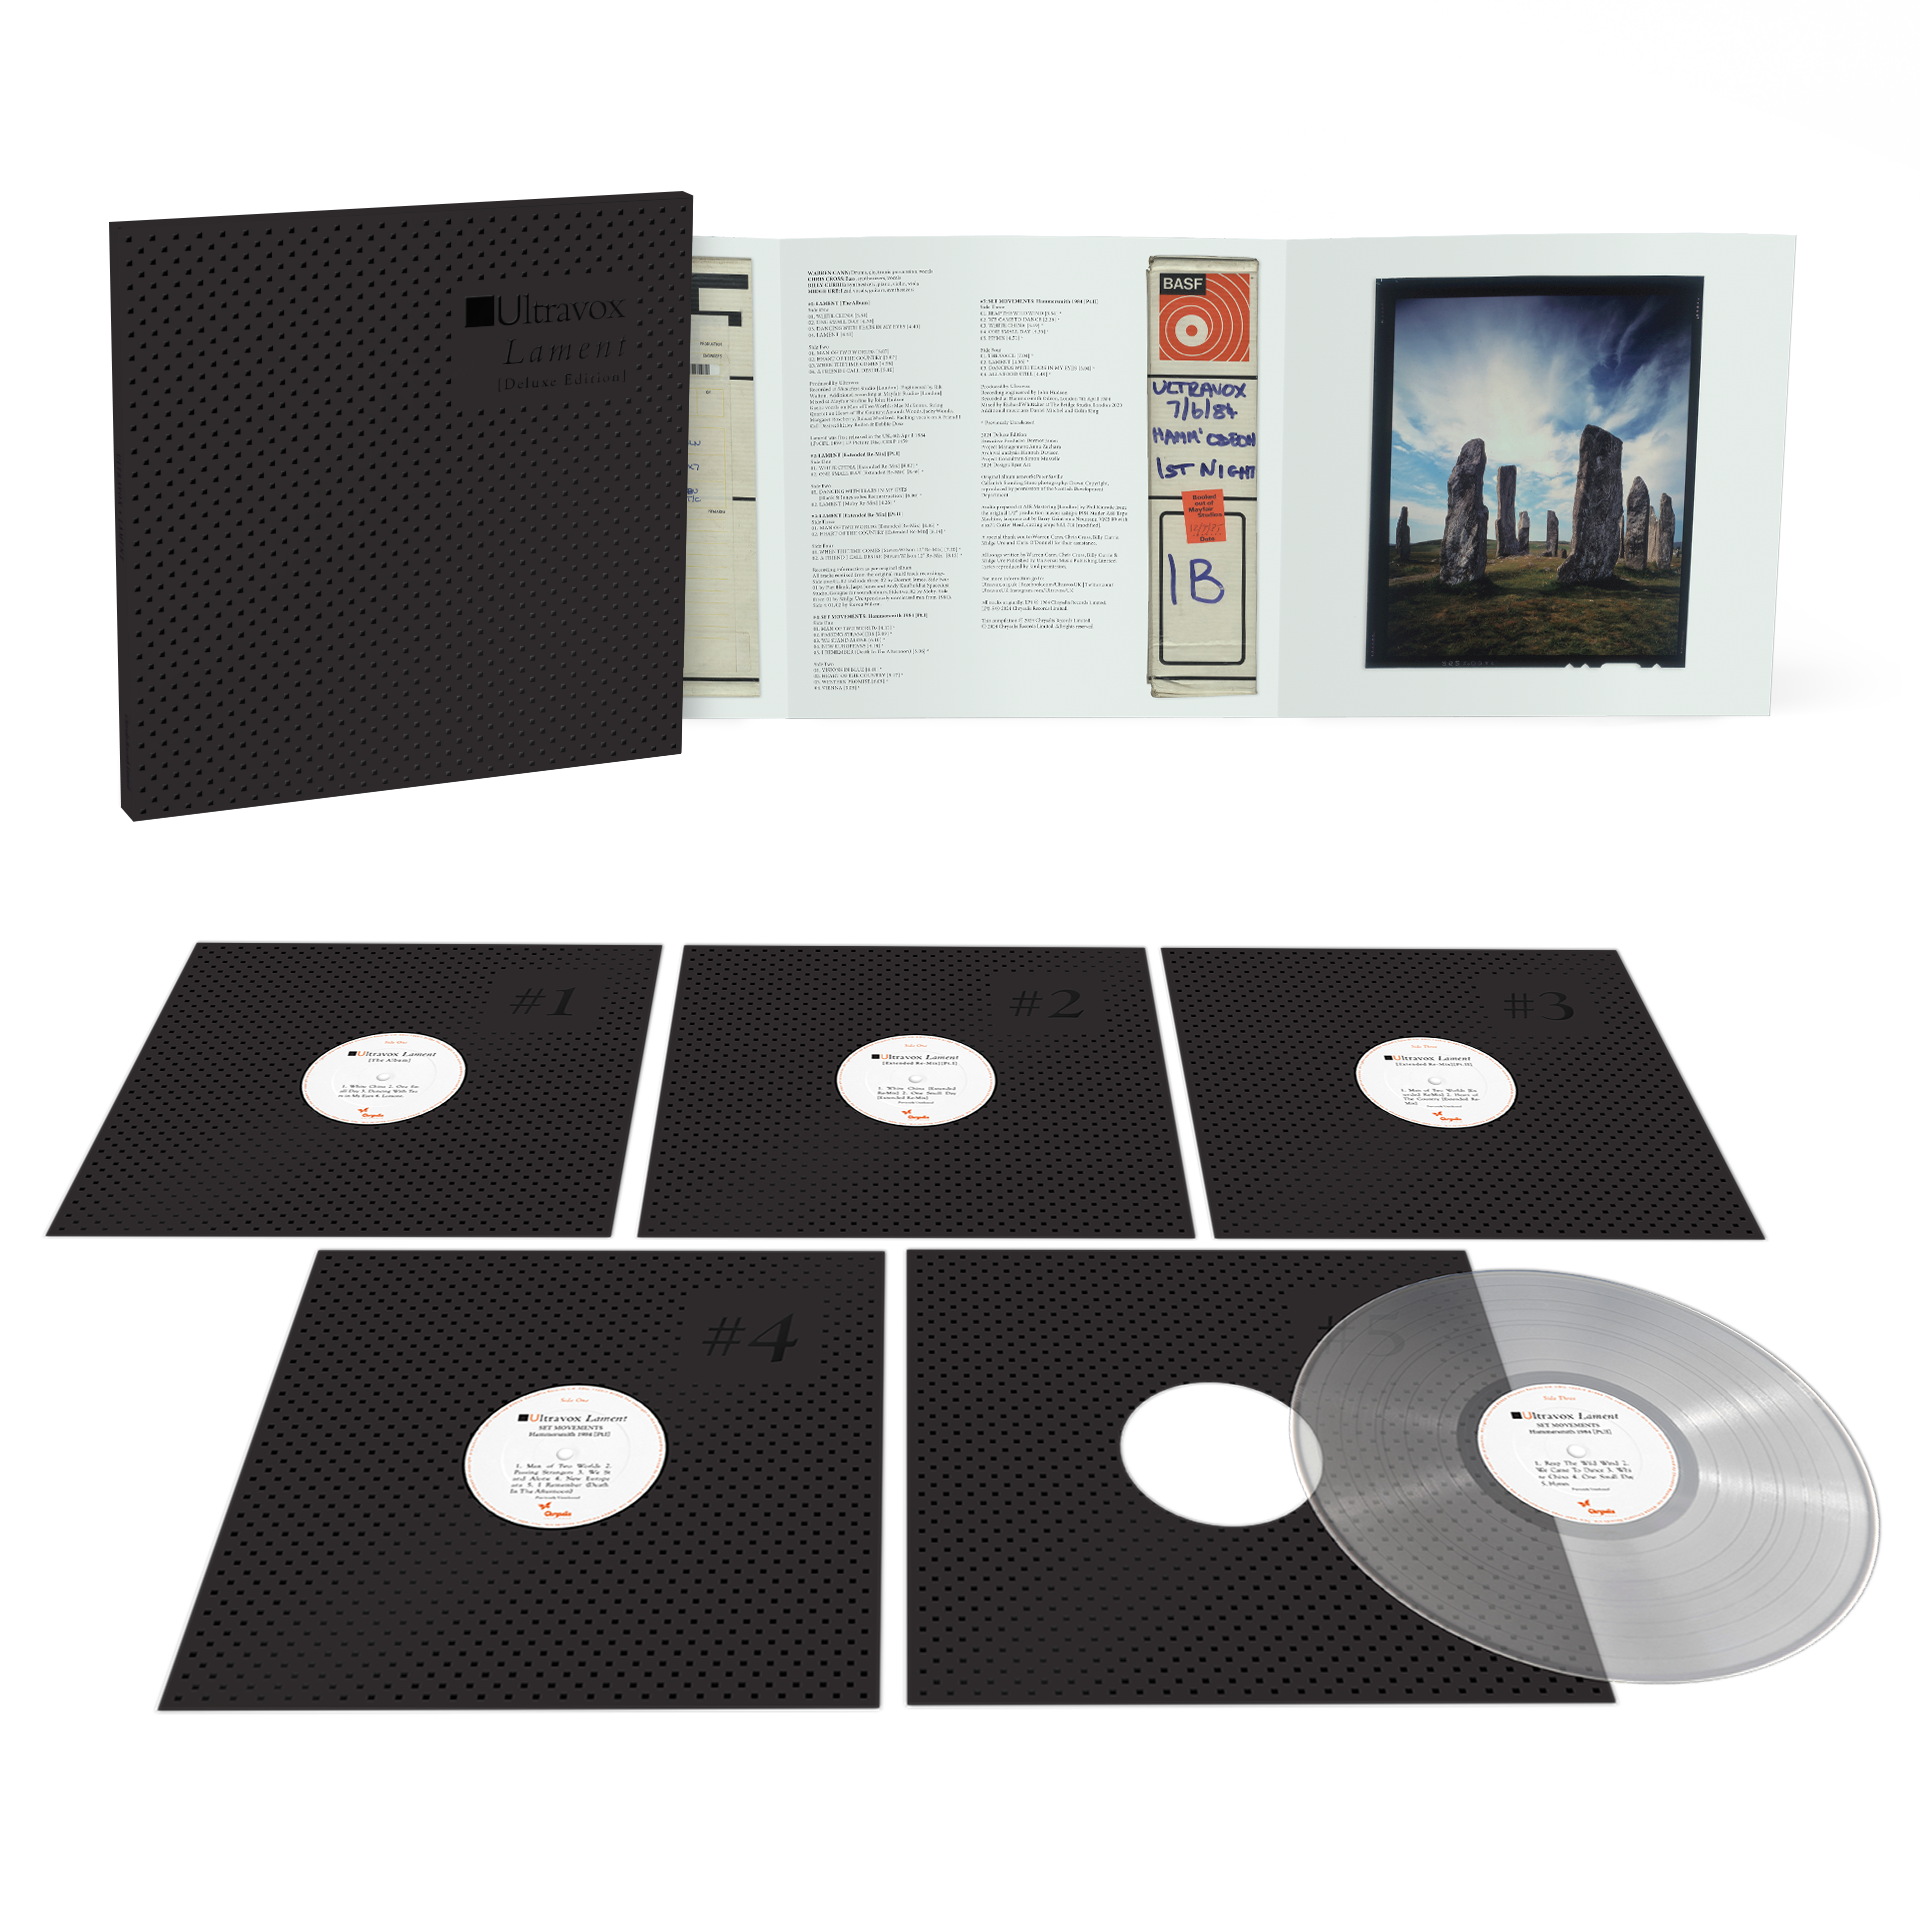 Ultravox - Lament (40th Anniversary Deluxe Edition): Limited Clear Vinyl 5LP Box Set